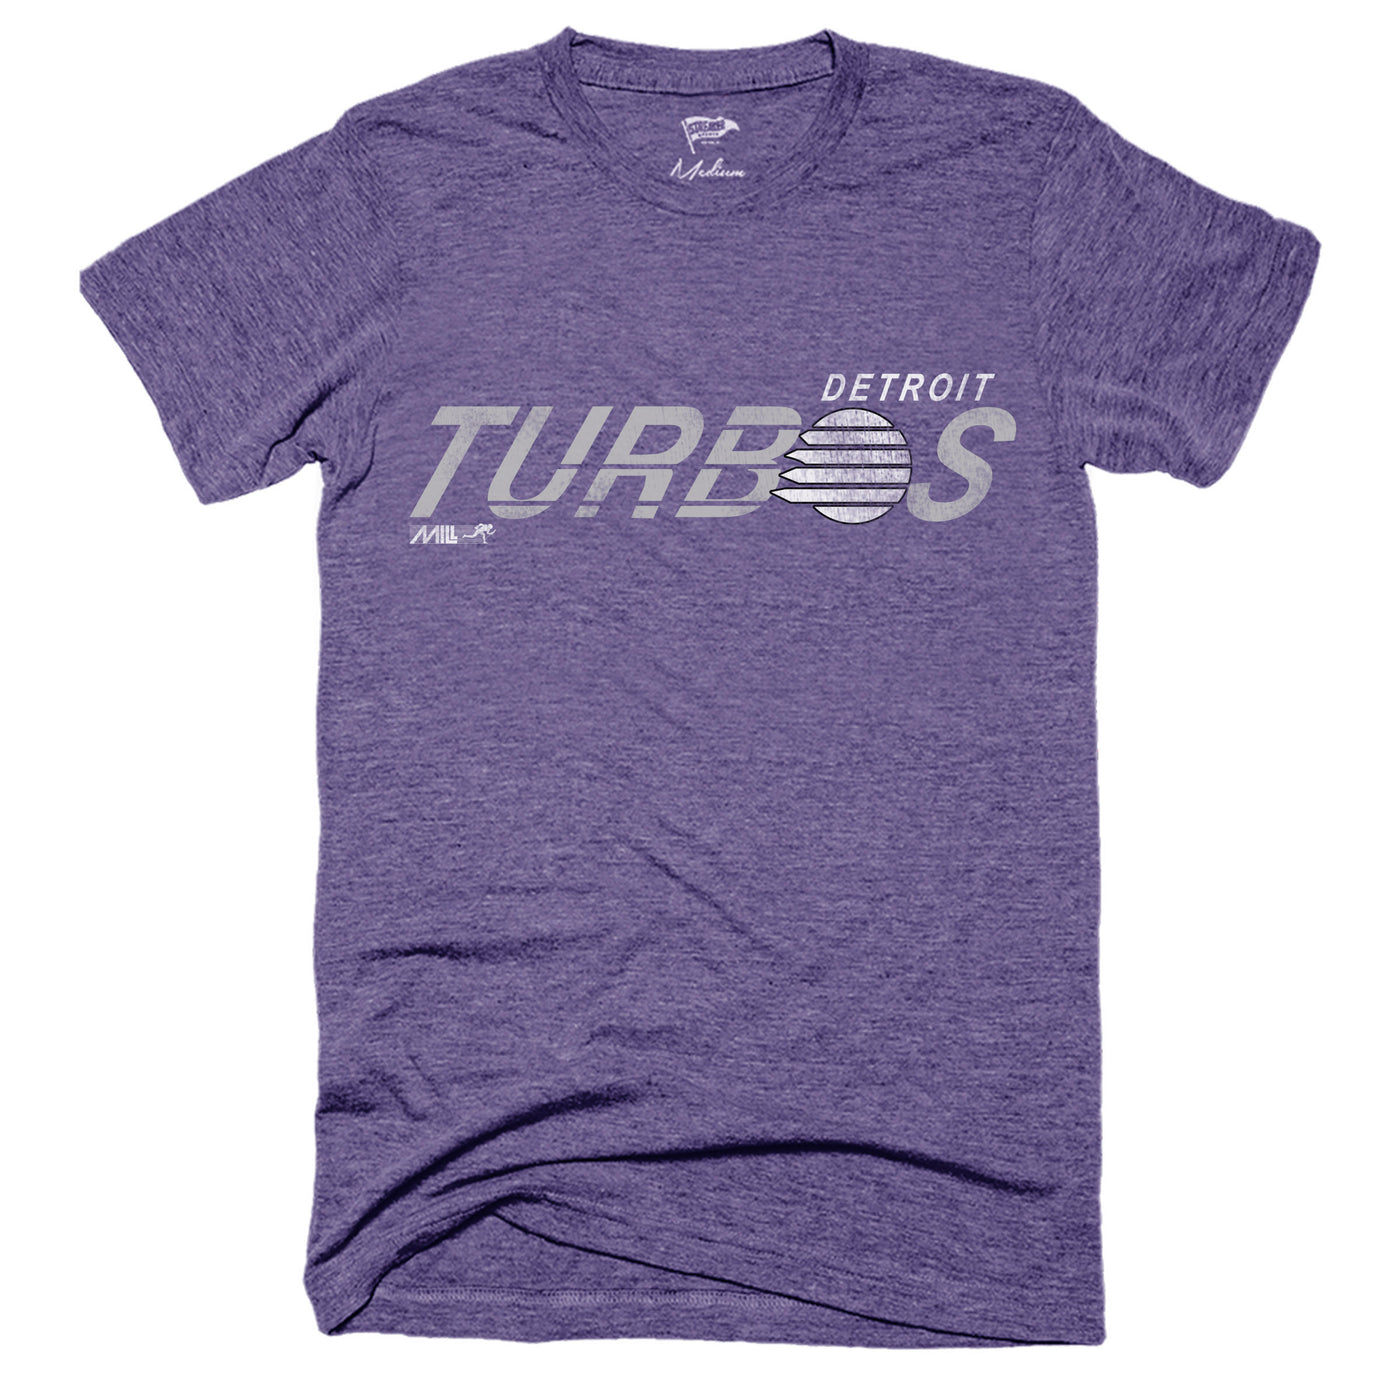 1989 Detroit Turbos Lacrosse Tee - Streaker Sports